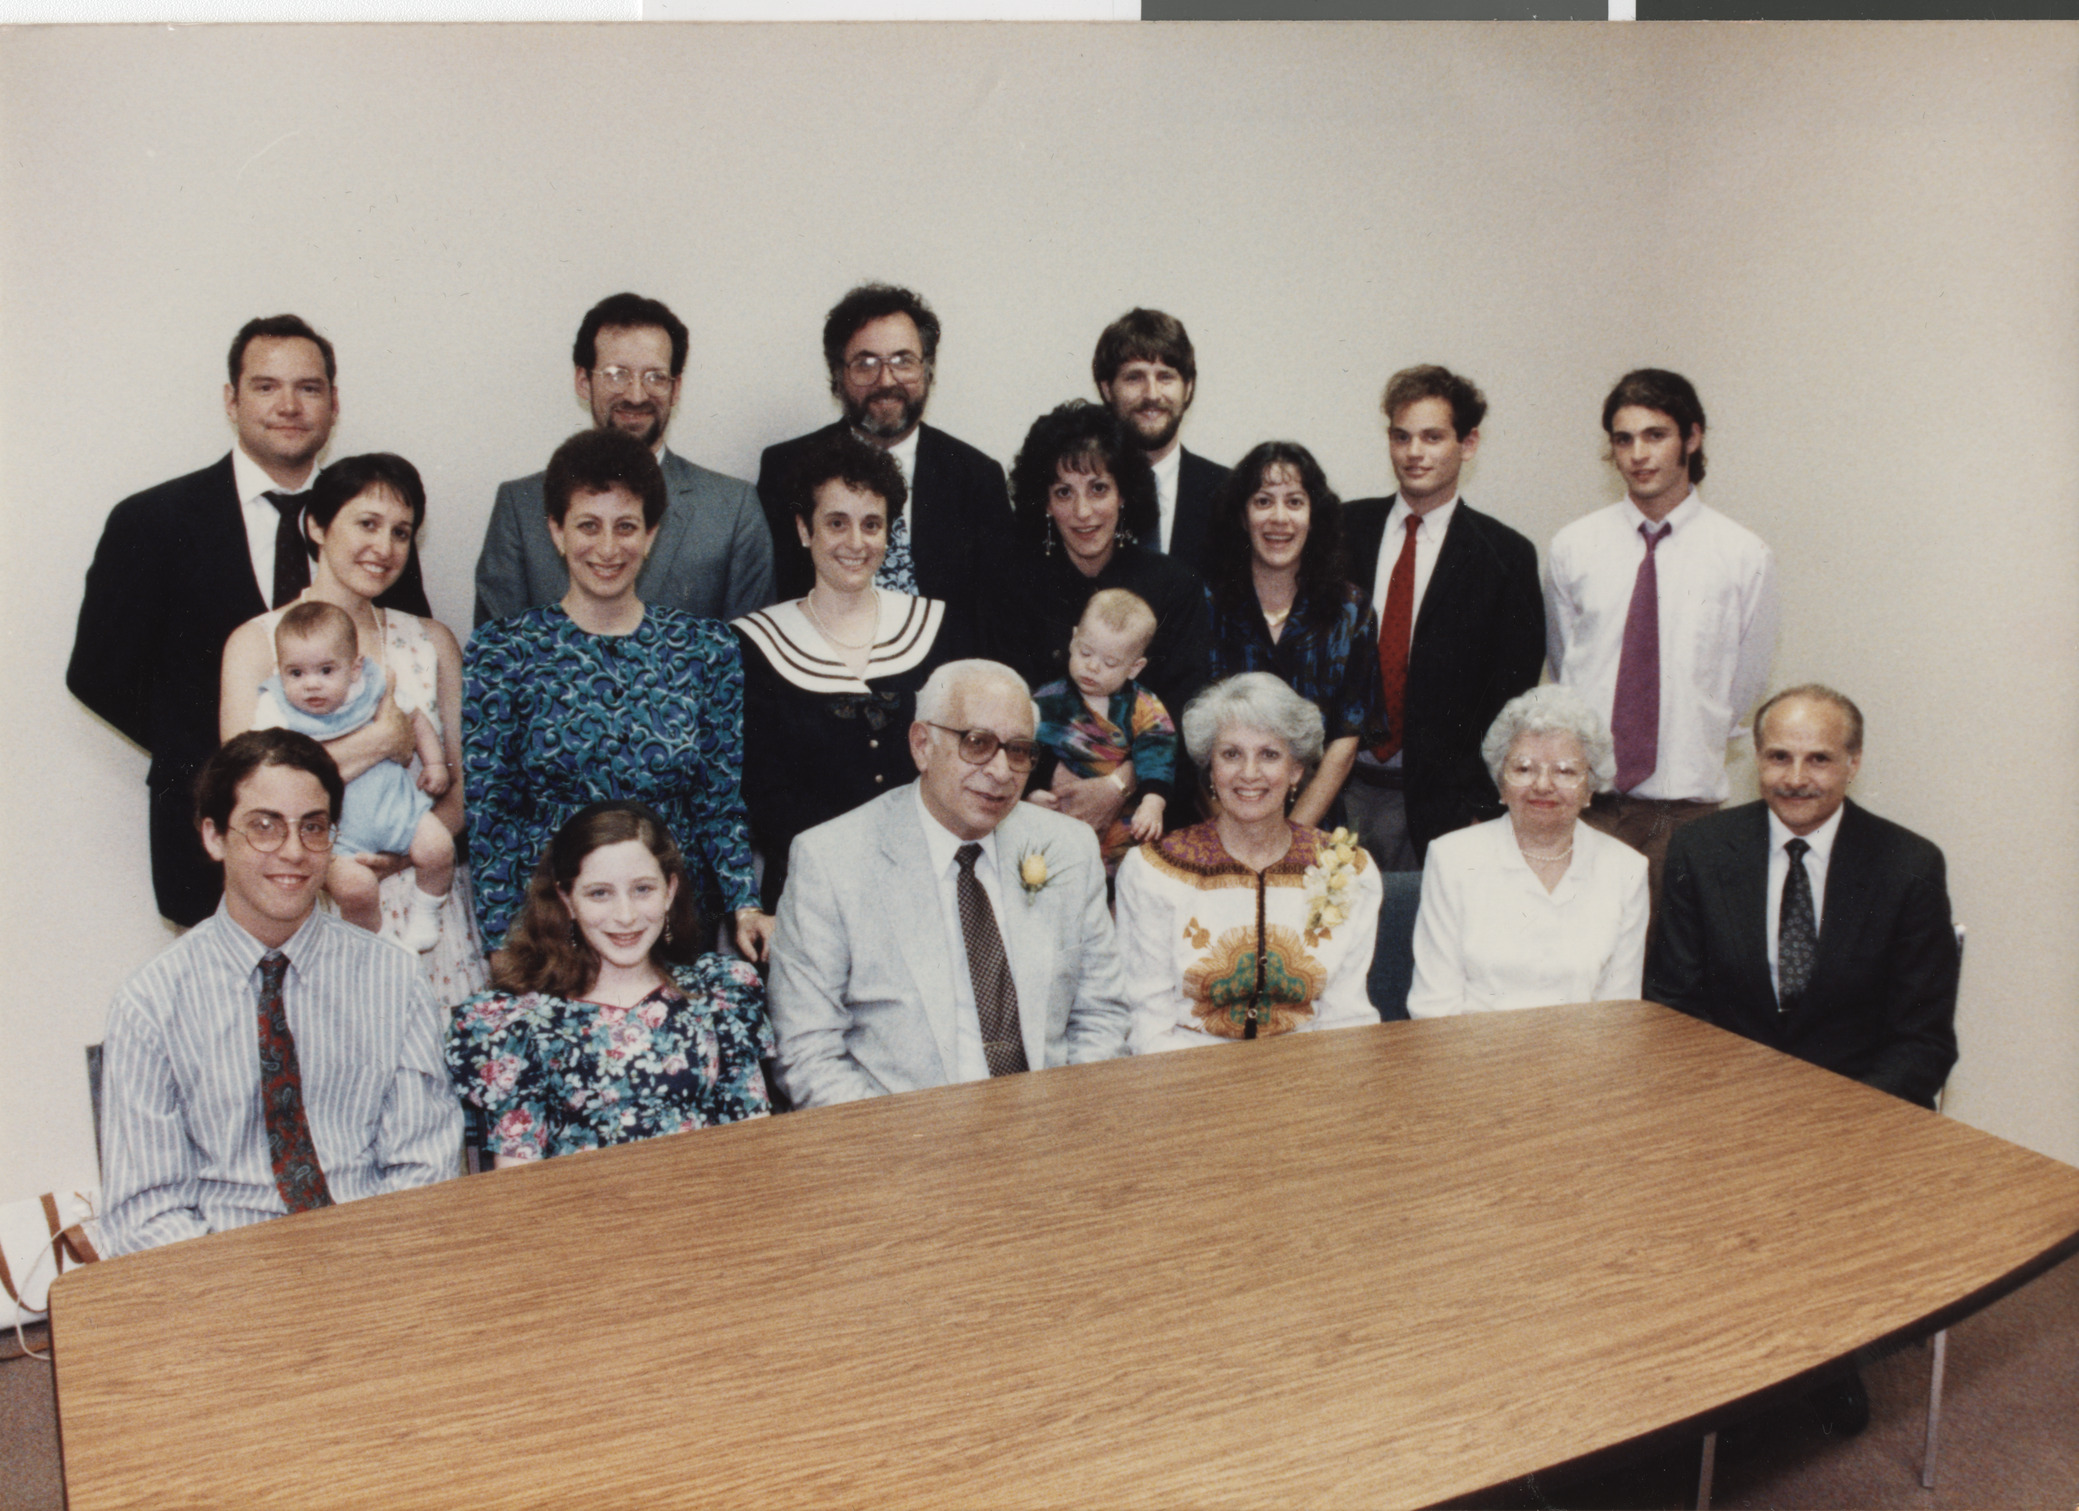 Family photograph from dedication of Dorothy Eisenberg Elementary School, 1991